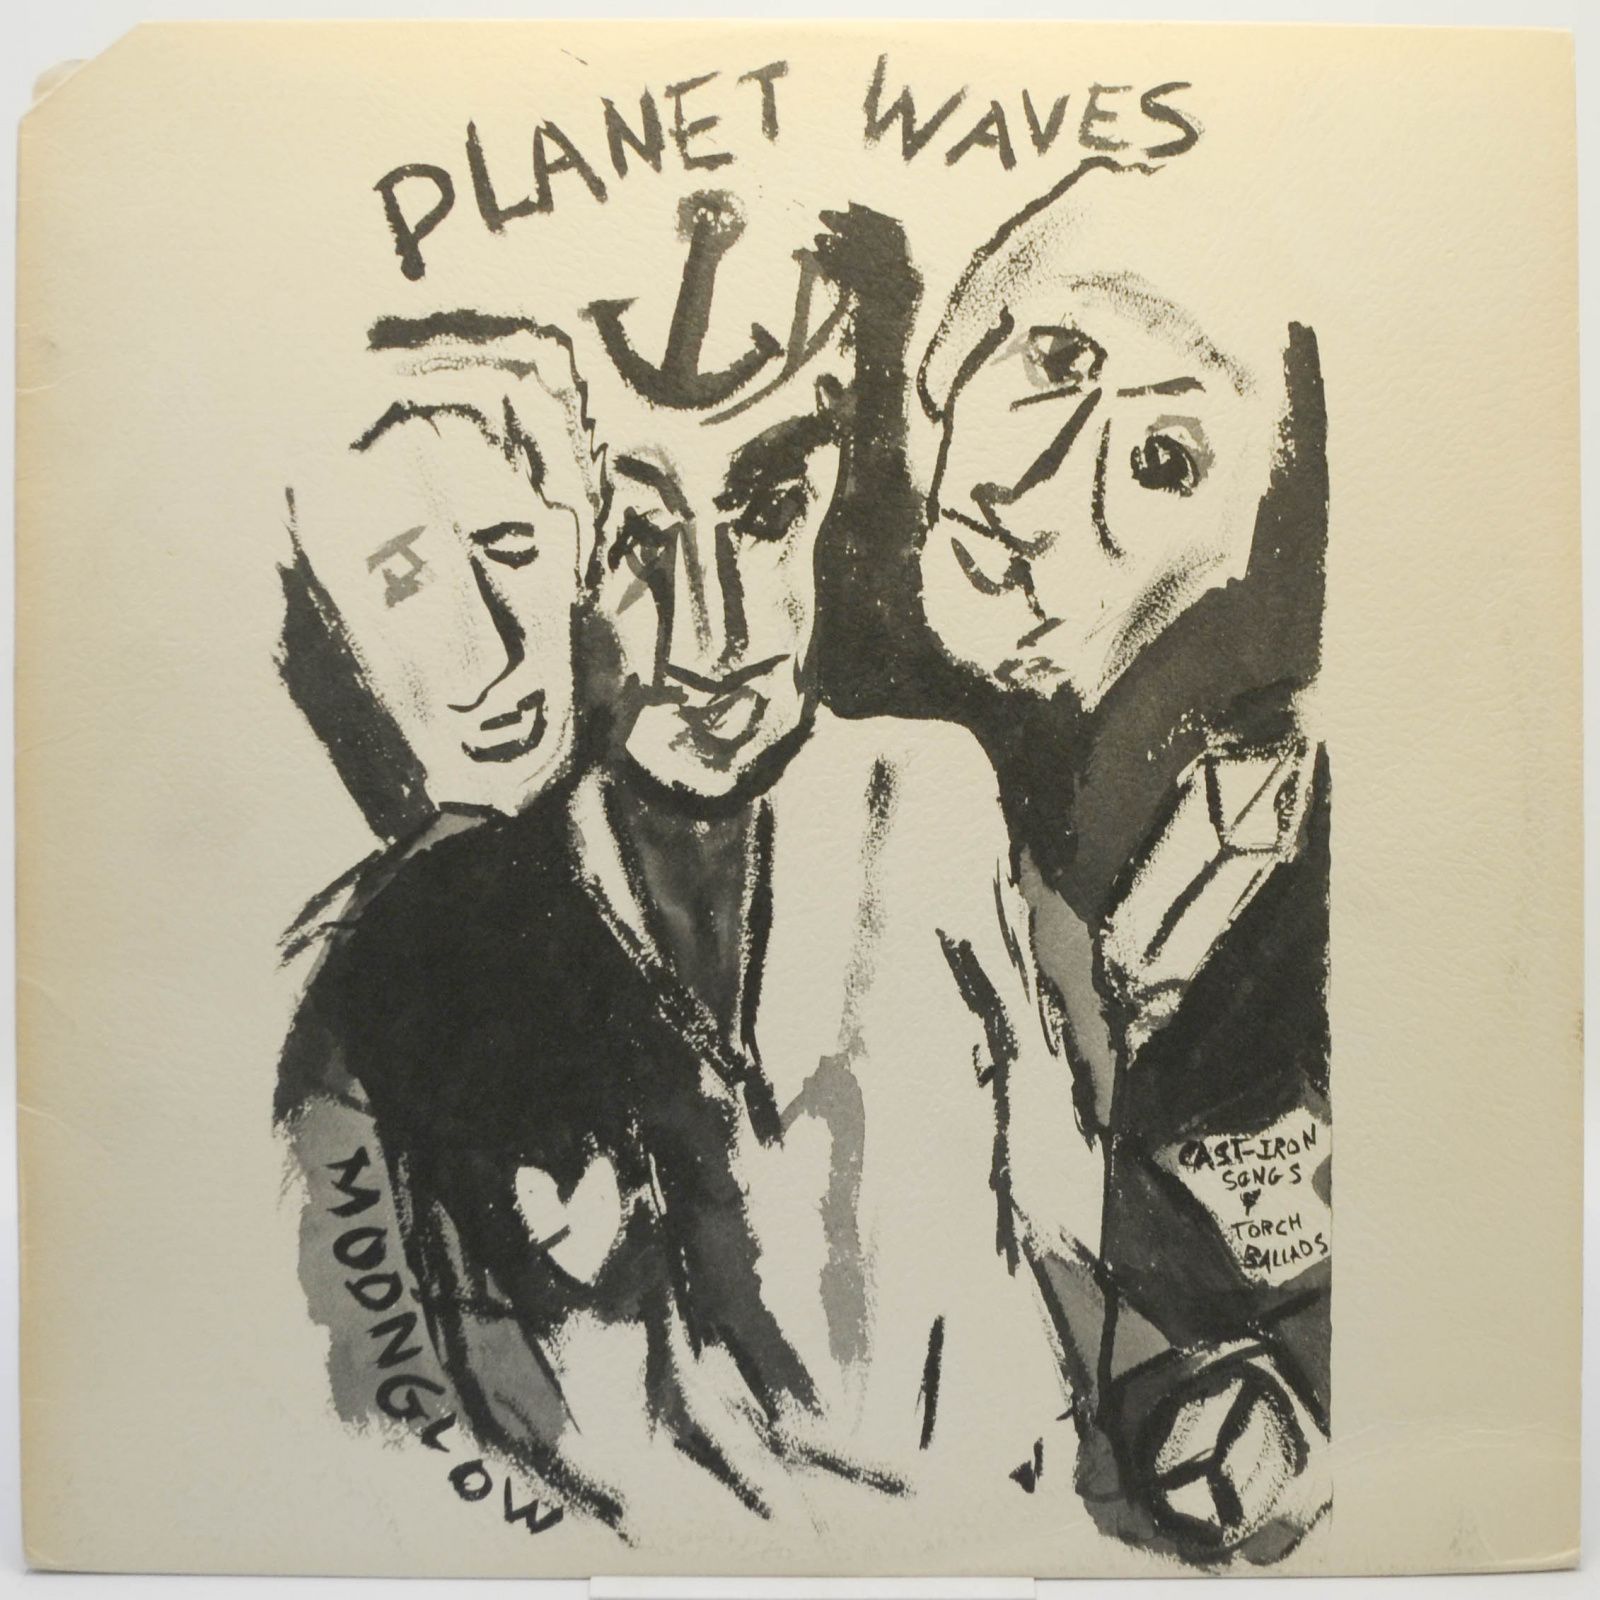 Planet Waves (USA), 1974